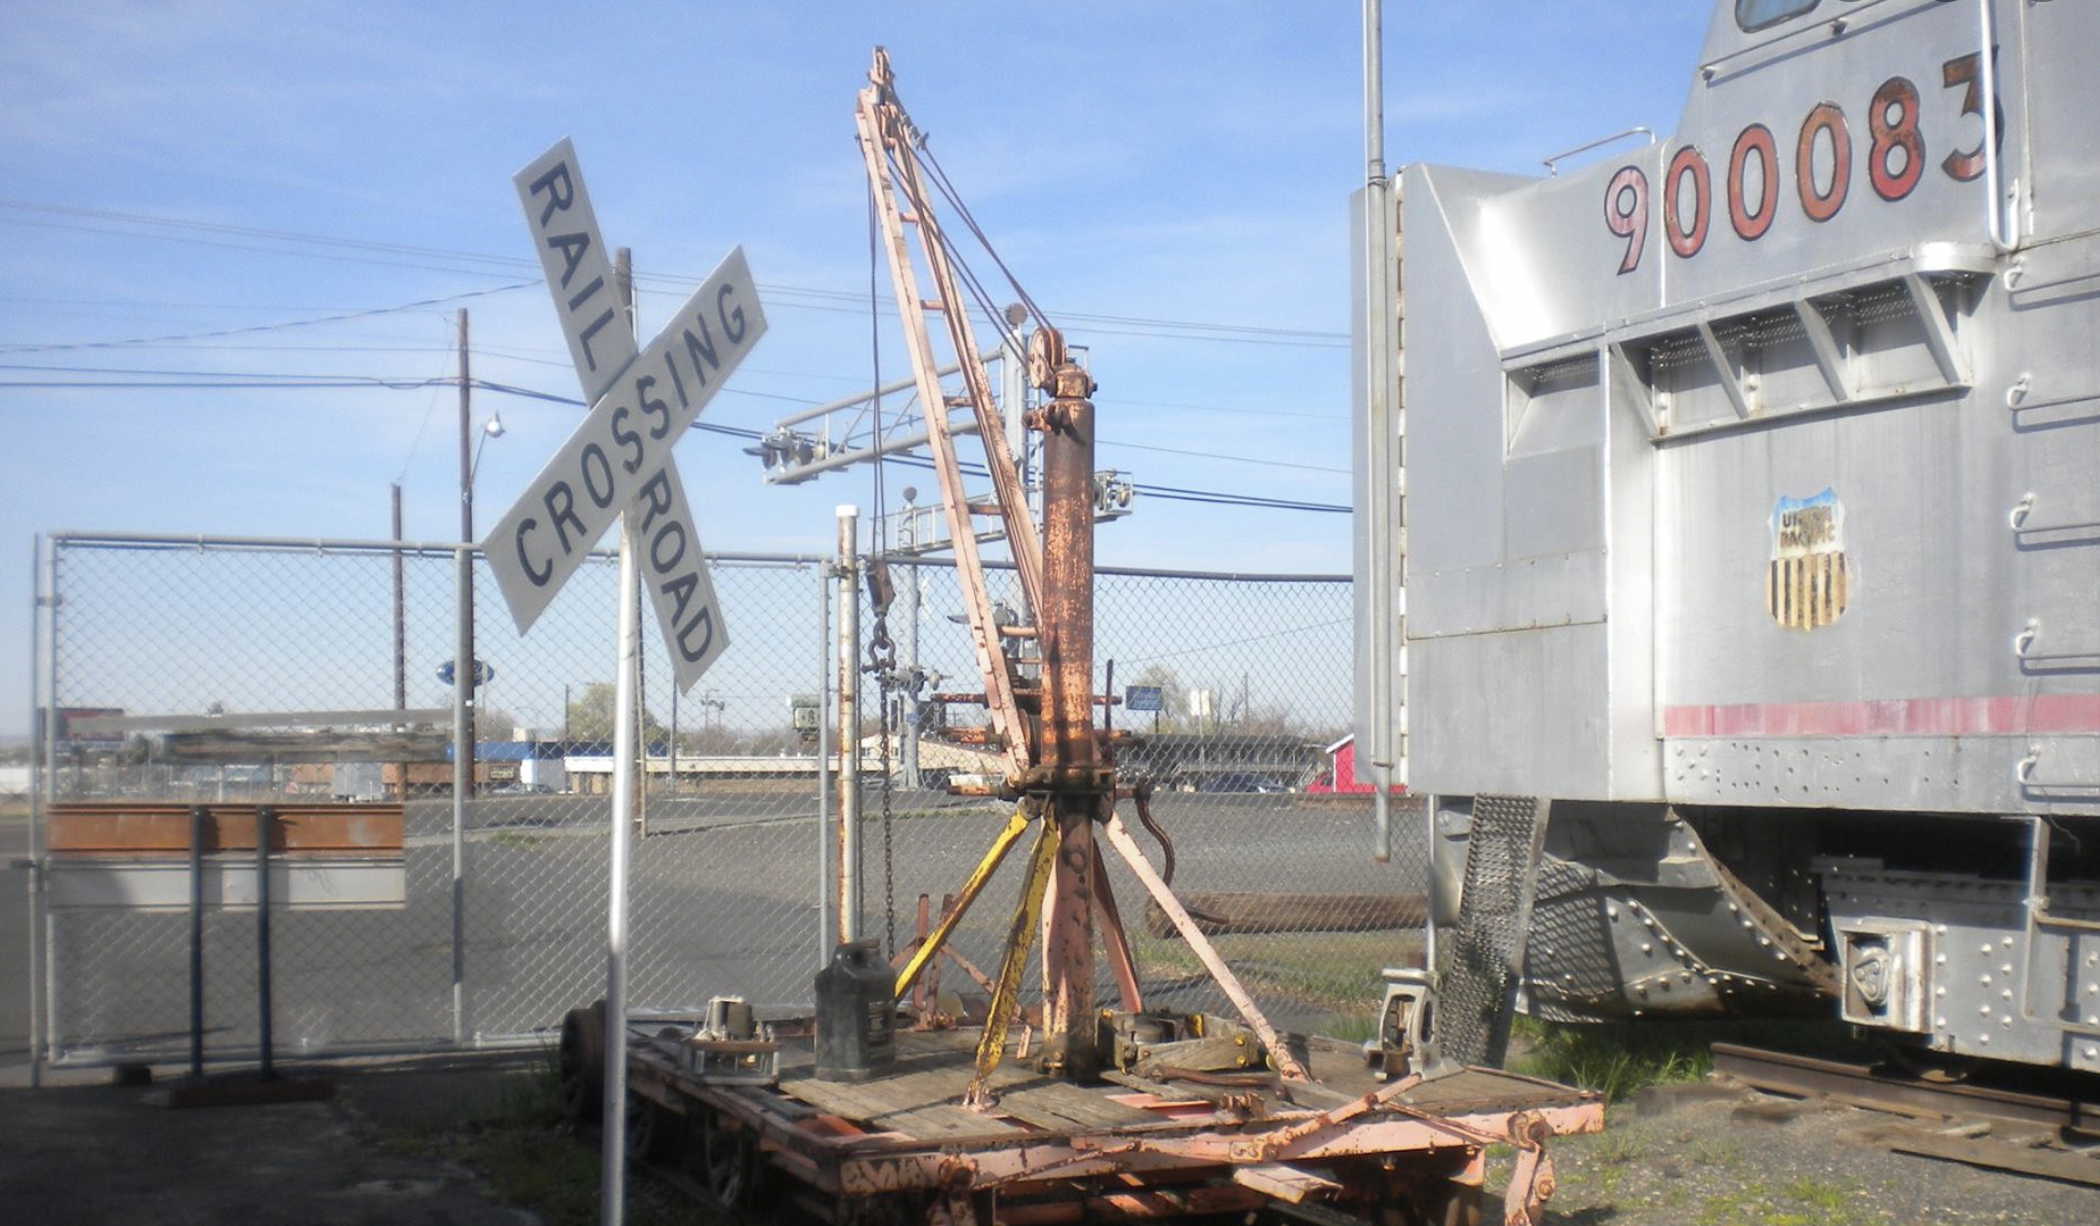 The Maxwell Siding Railroad Museum